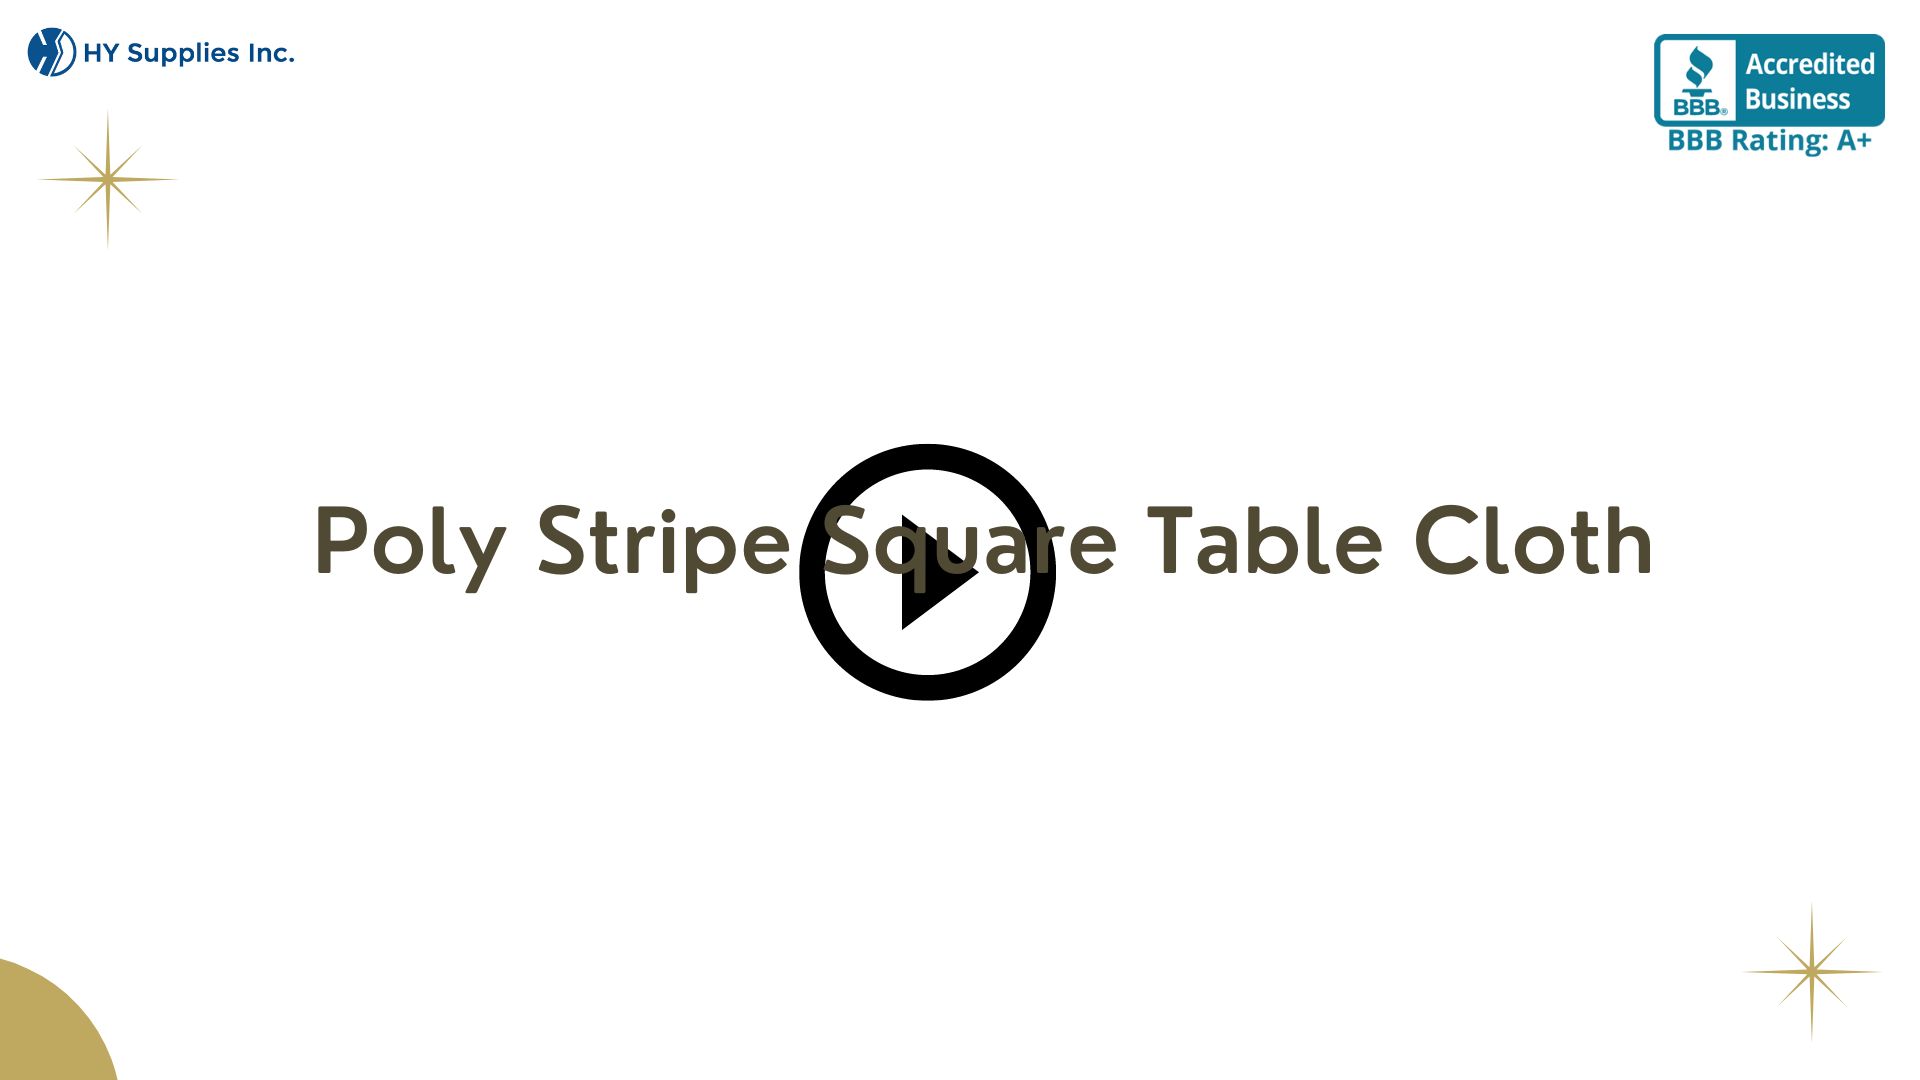 Poly Stripe Square Tablecloth